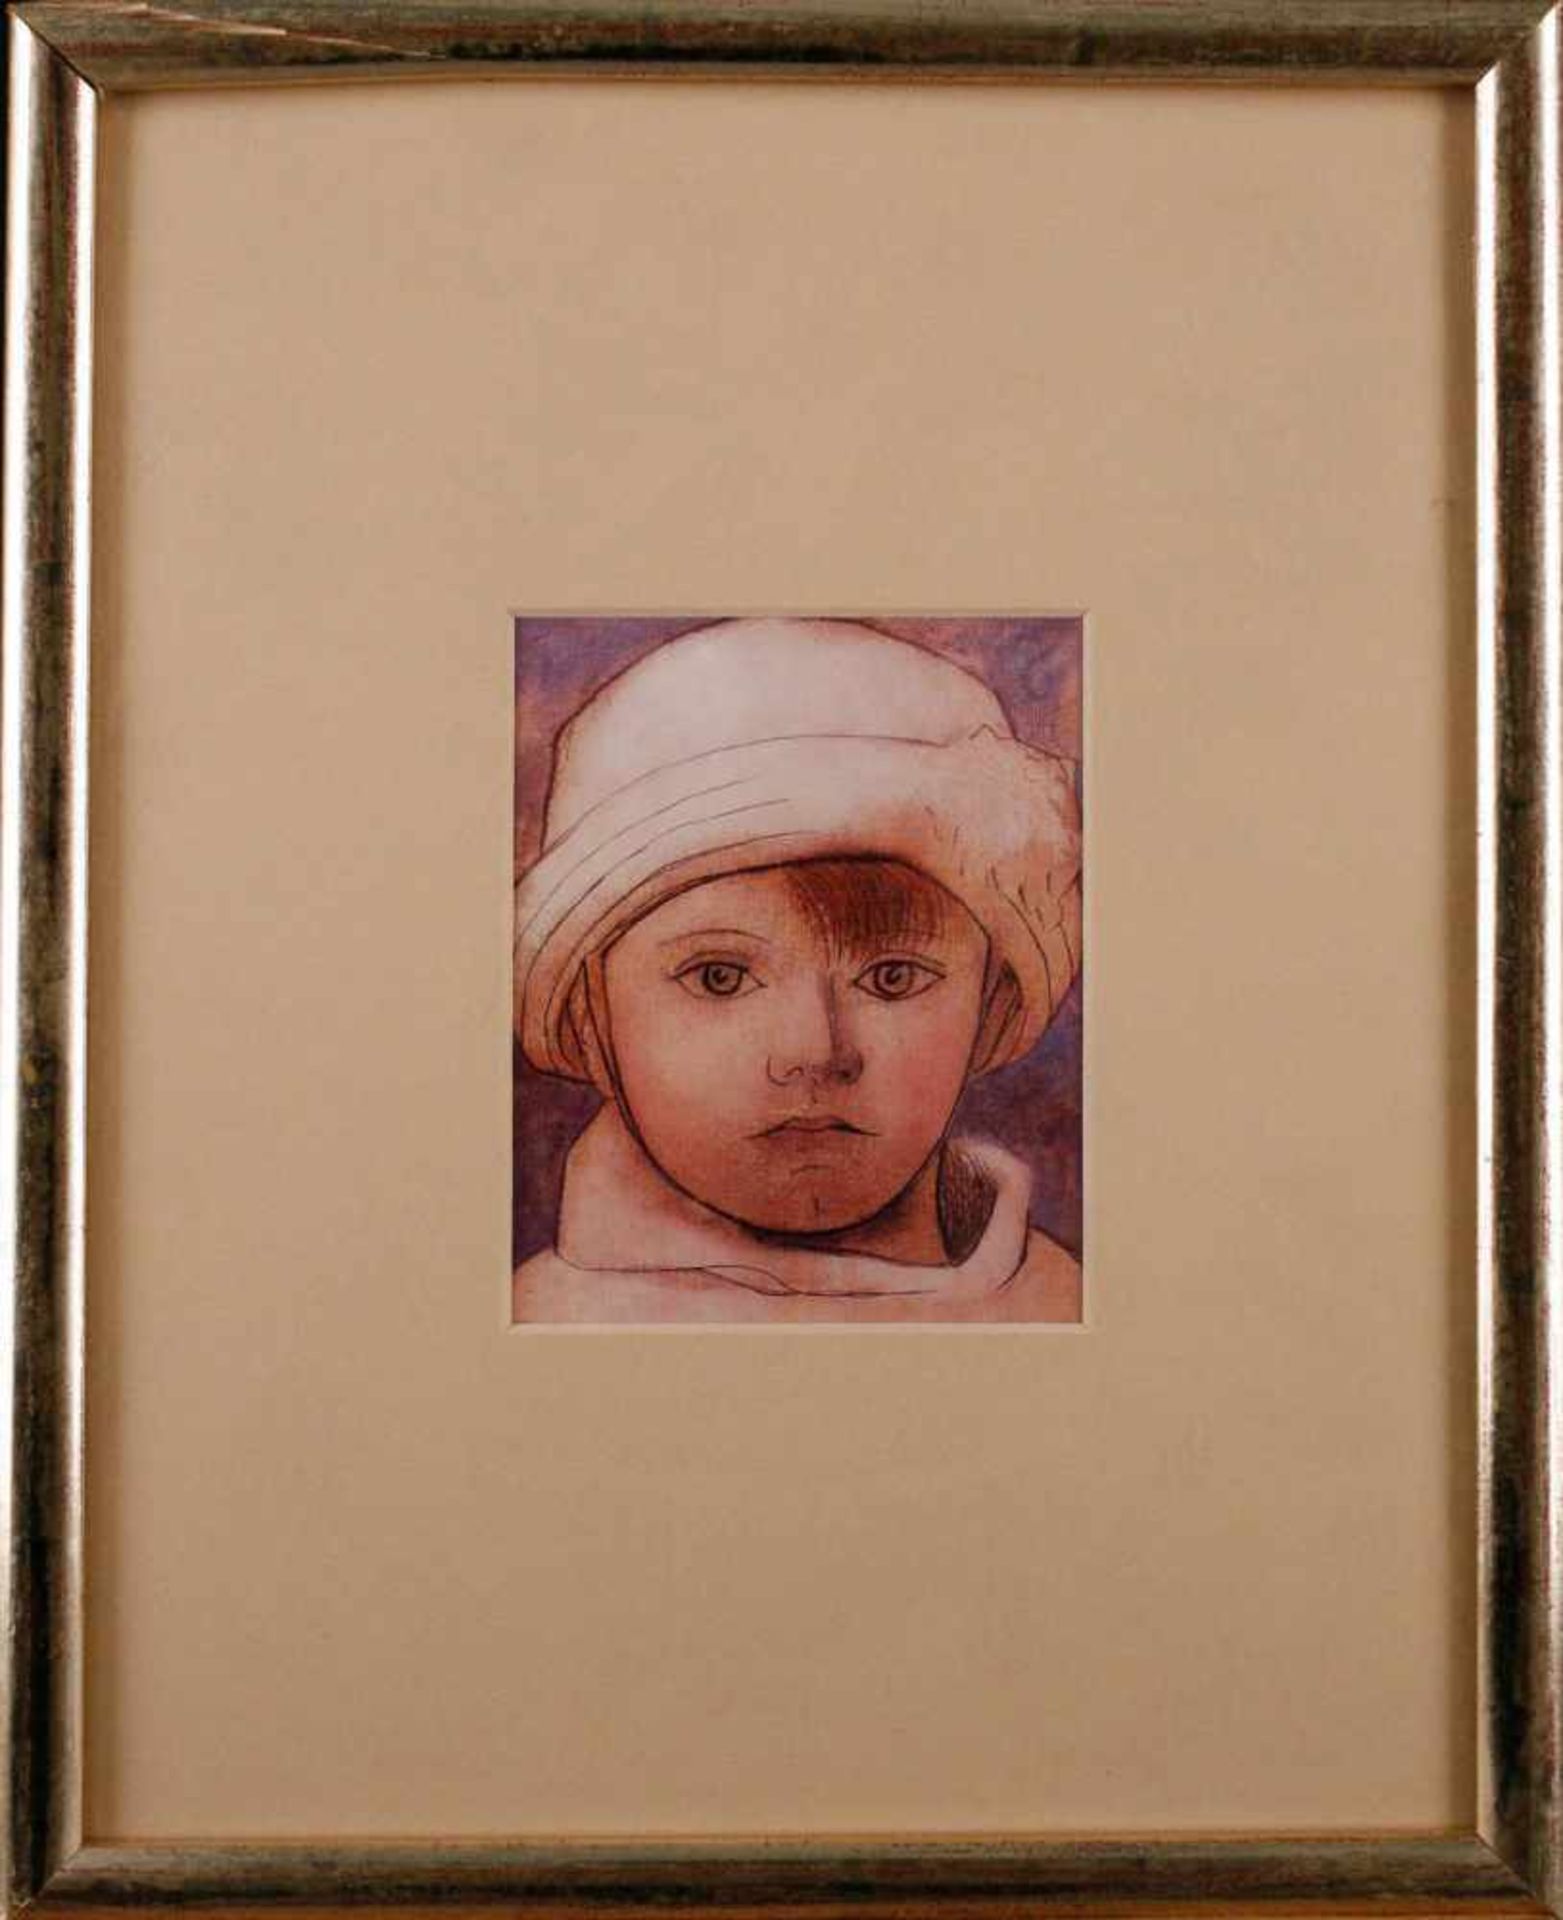 GRAFIKKinderportrait Offset auf festem Papier, koloriert. Sichtmaß 12 x 9,5 cm. Im Passepartout - Bild 2 aus 2